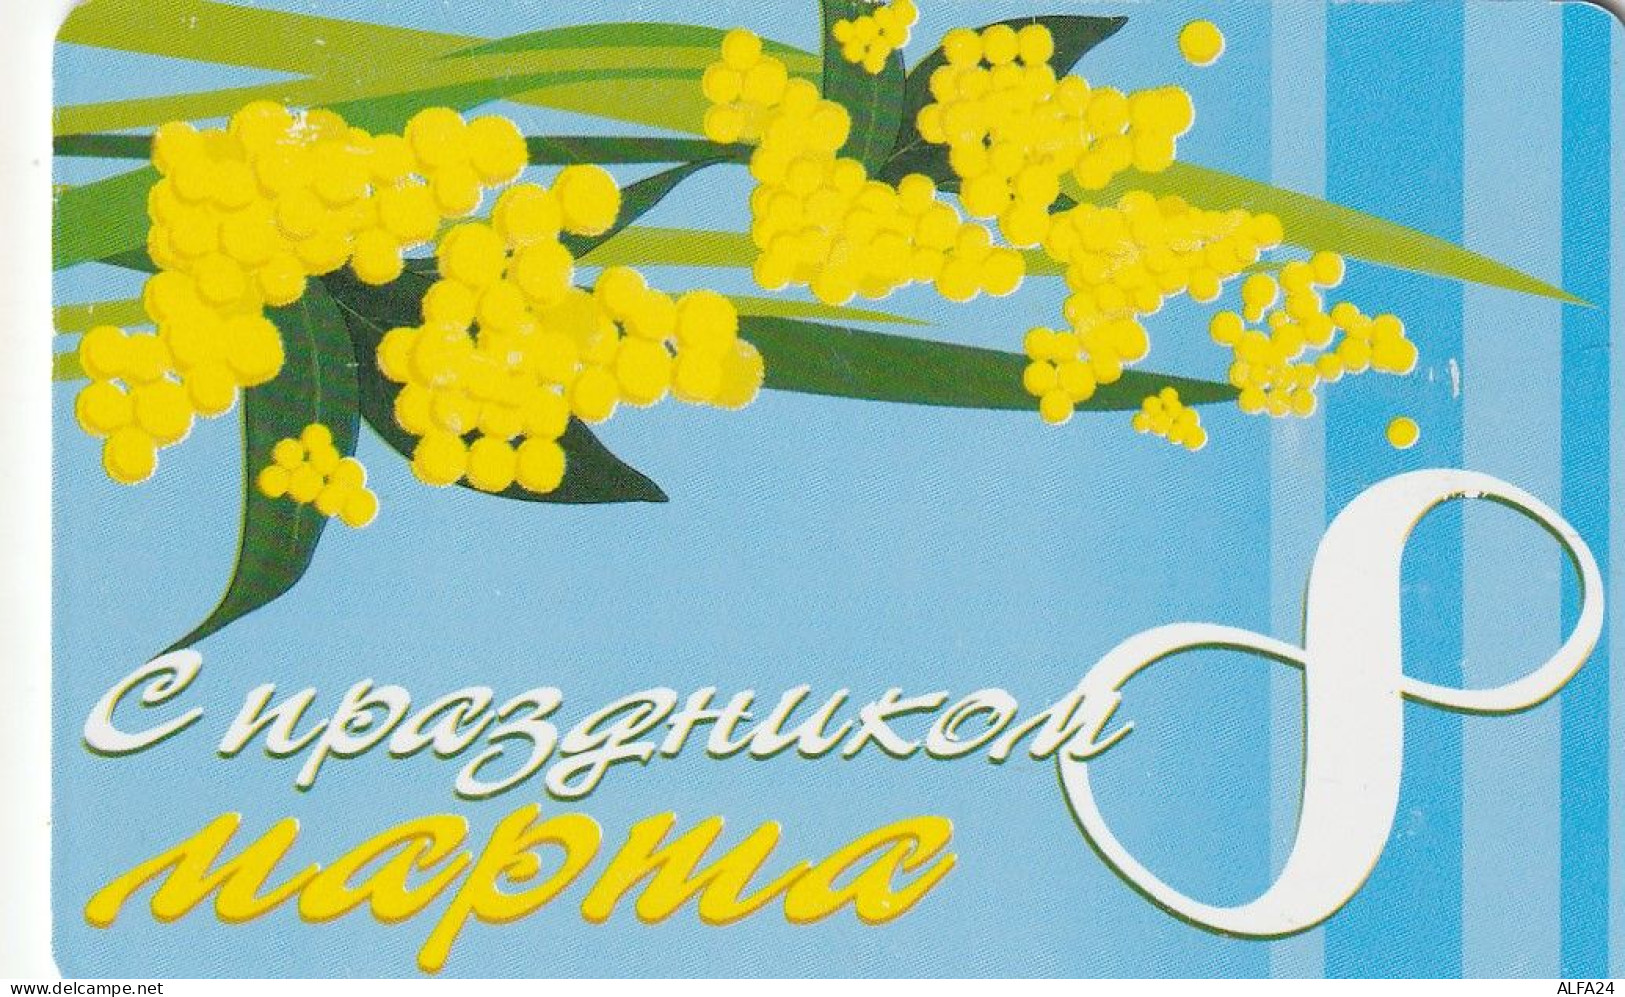 PHONE CARD RUSSIA Bashinformsvyaz - Ufa (E10.4.5 - Russia